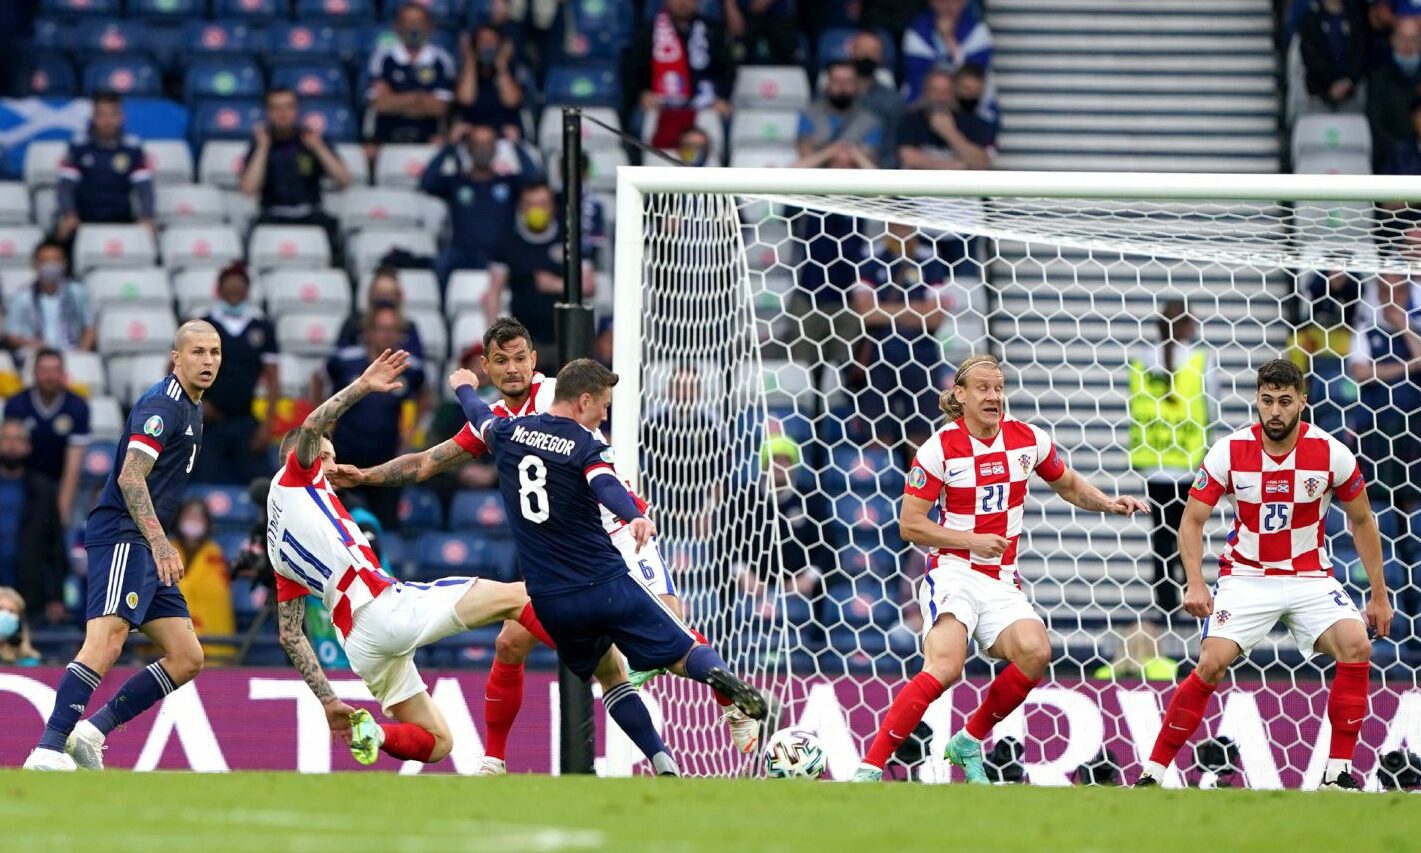 Callum McGregor scores Scotland's first tournament goal since 1998.